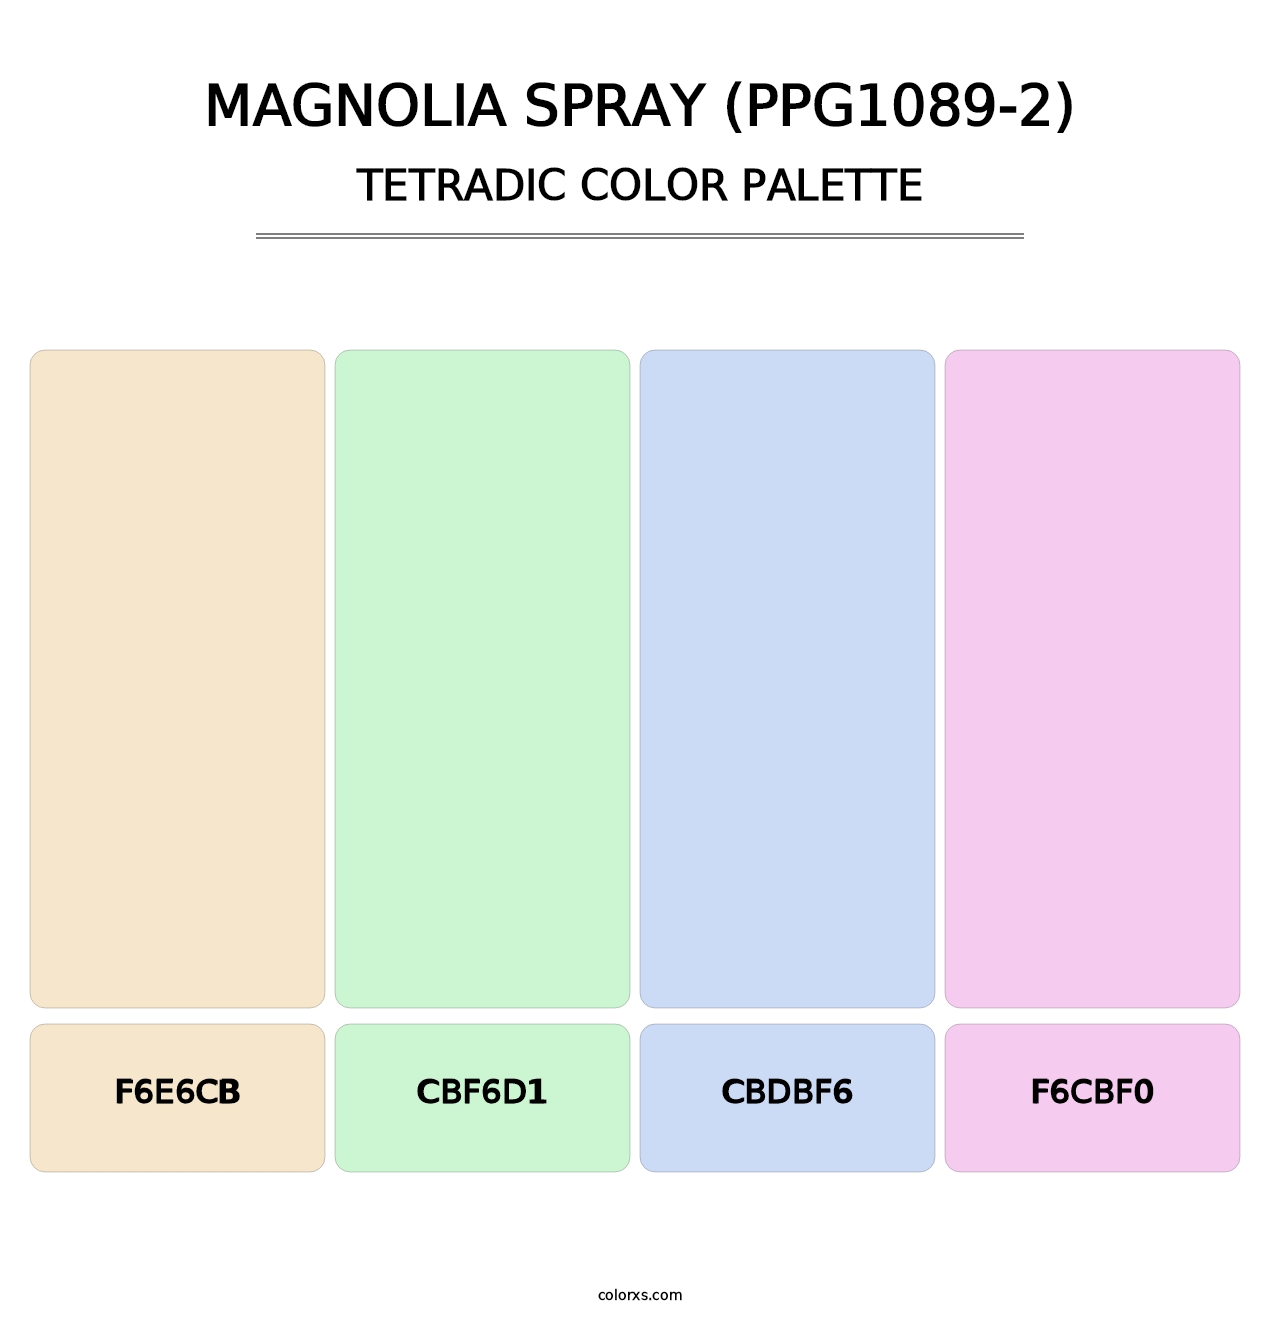 Magnolia Spray (PPG1089-2) - Tetradic Color Palette